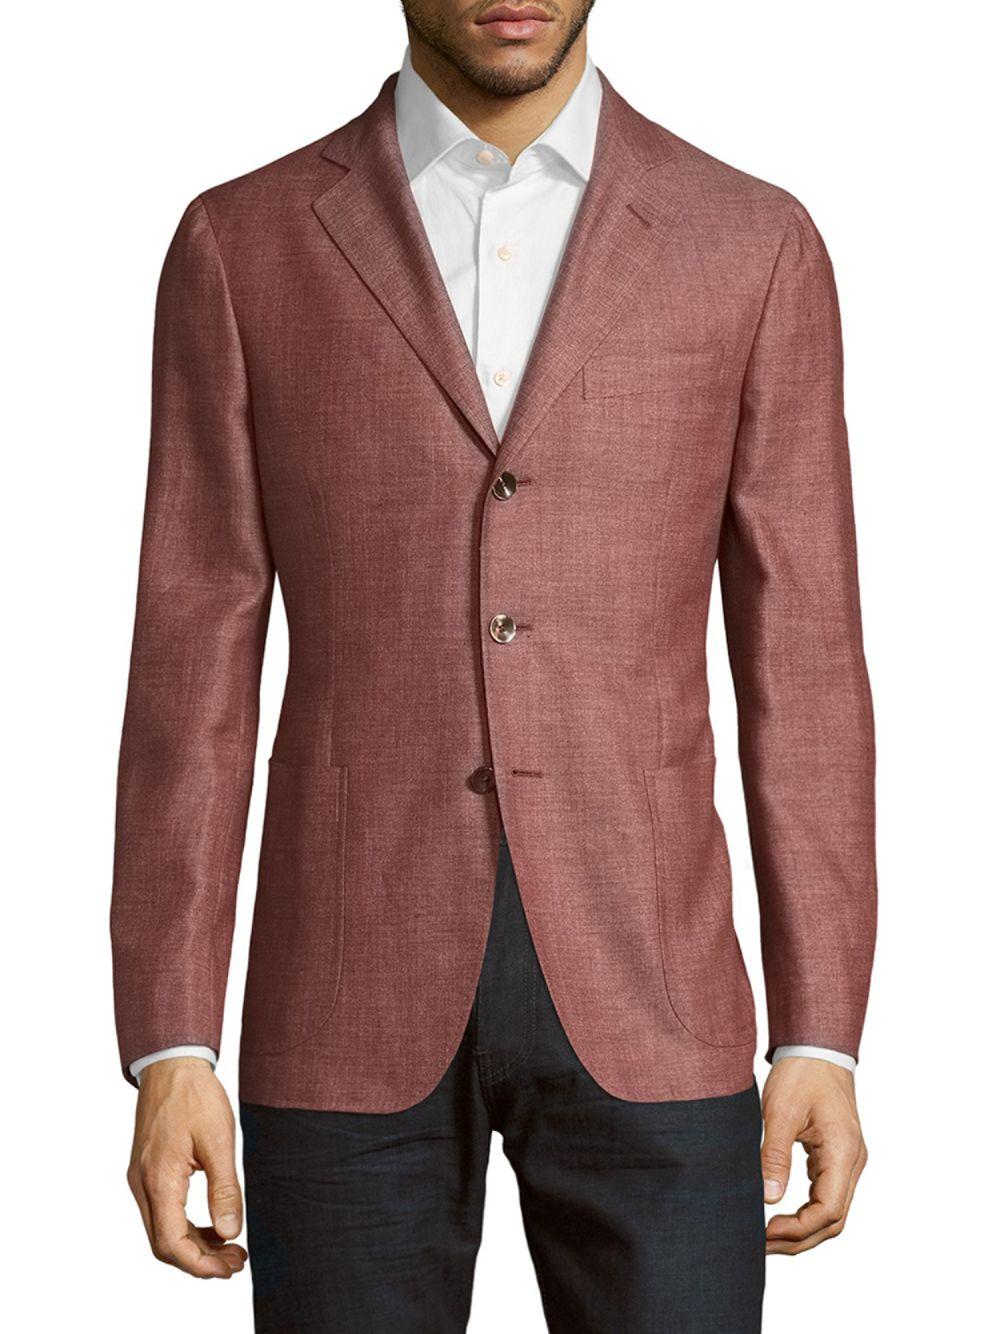 Pal Zileri Linen Solid Notch-lapel Jacket in Red for Men - Lyst